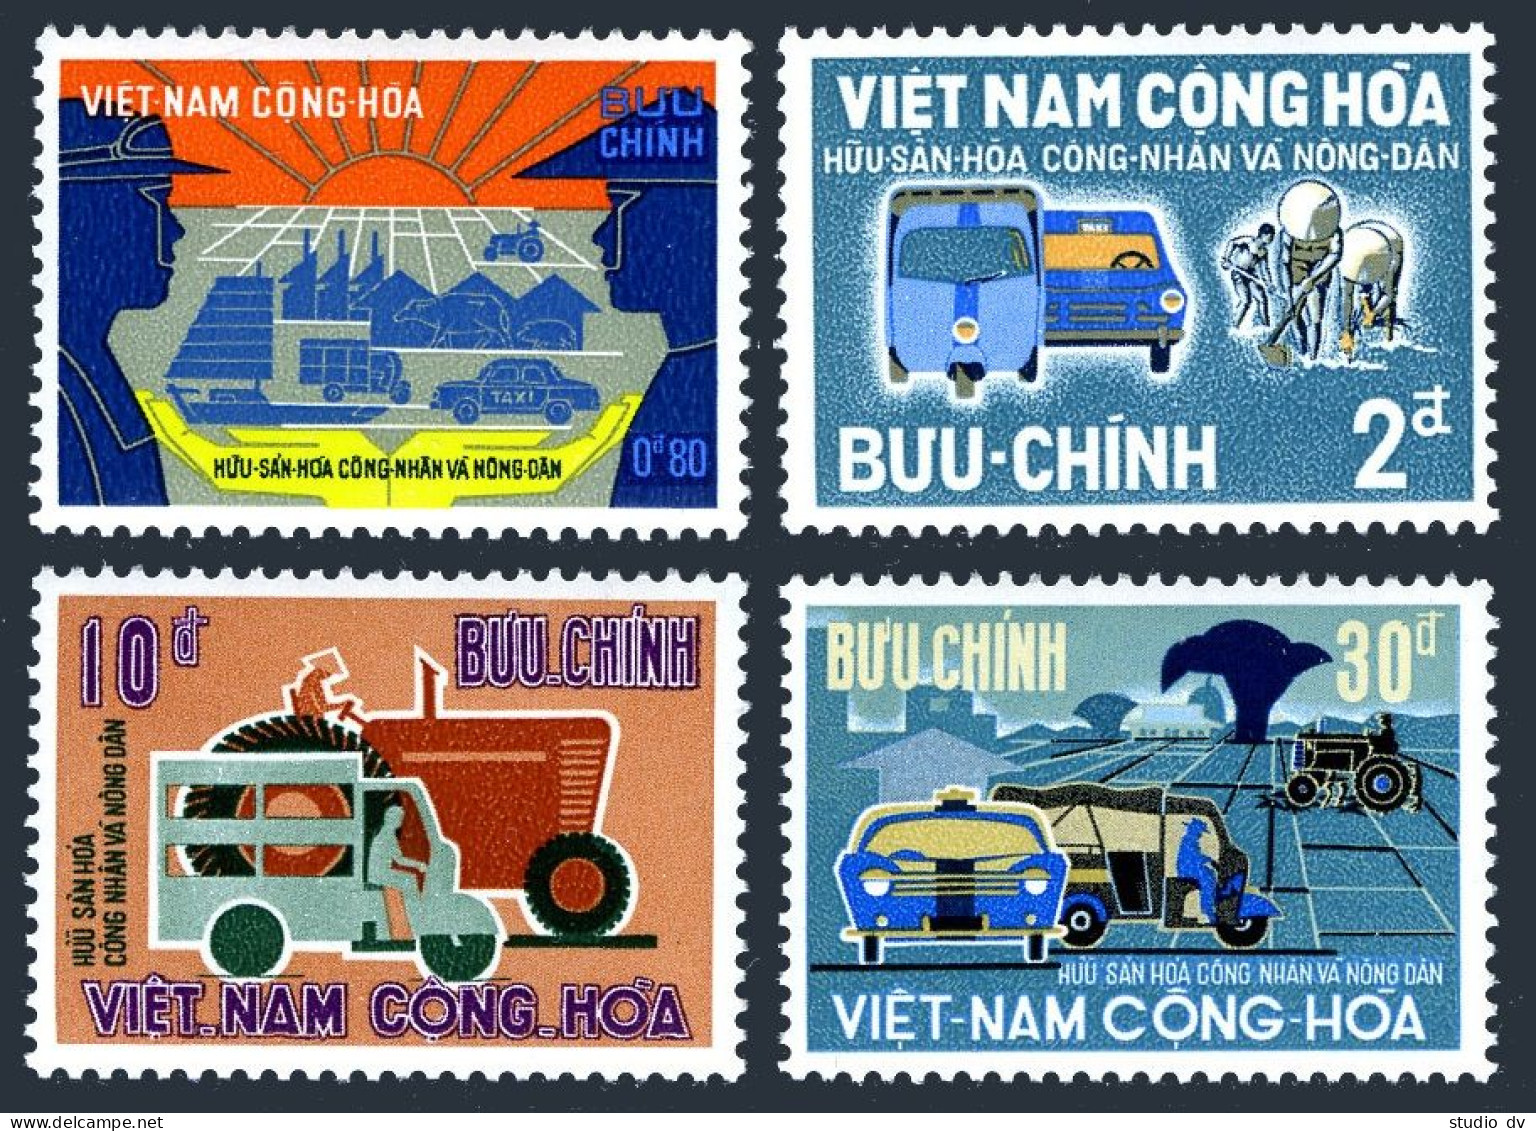 Viet Nam South 331-334, MNH. Mi 408-411. Private Property Ownership, 1968. Cars. - Viêt-Nam